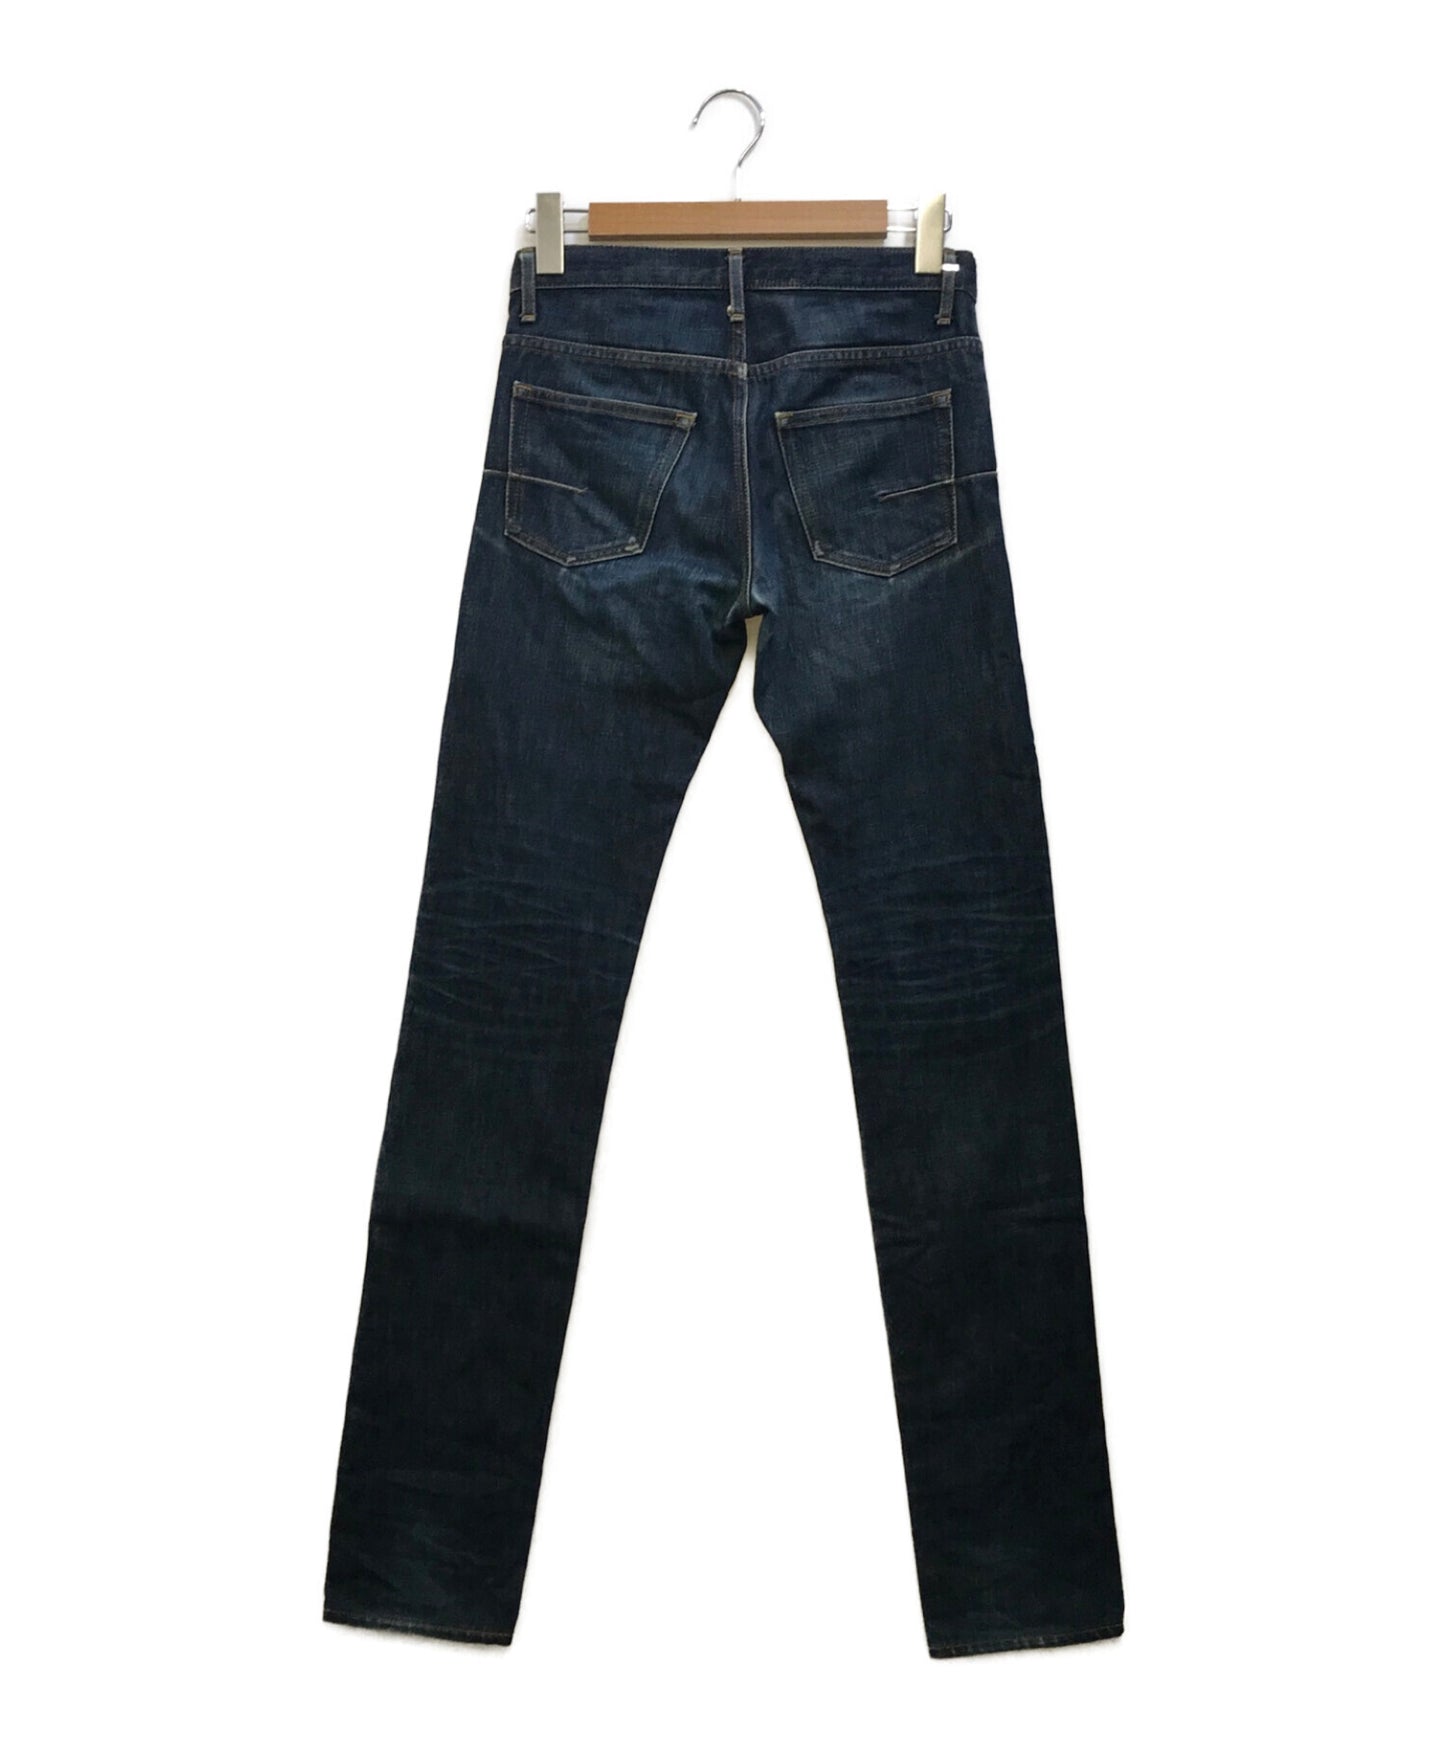 Hedi Slimane的Dior Homme 06SS瘦牛仔布褲PIH1011565 BECK時期